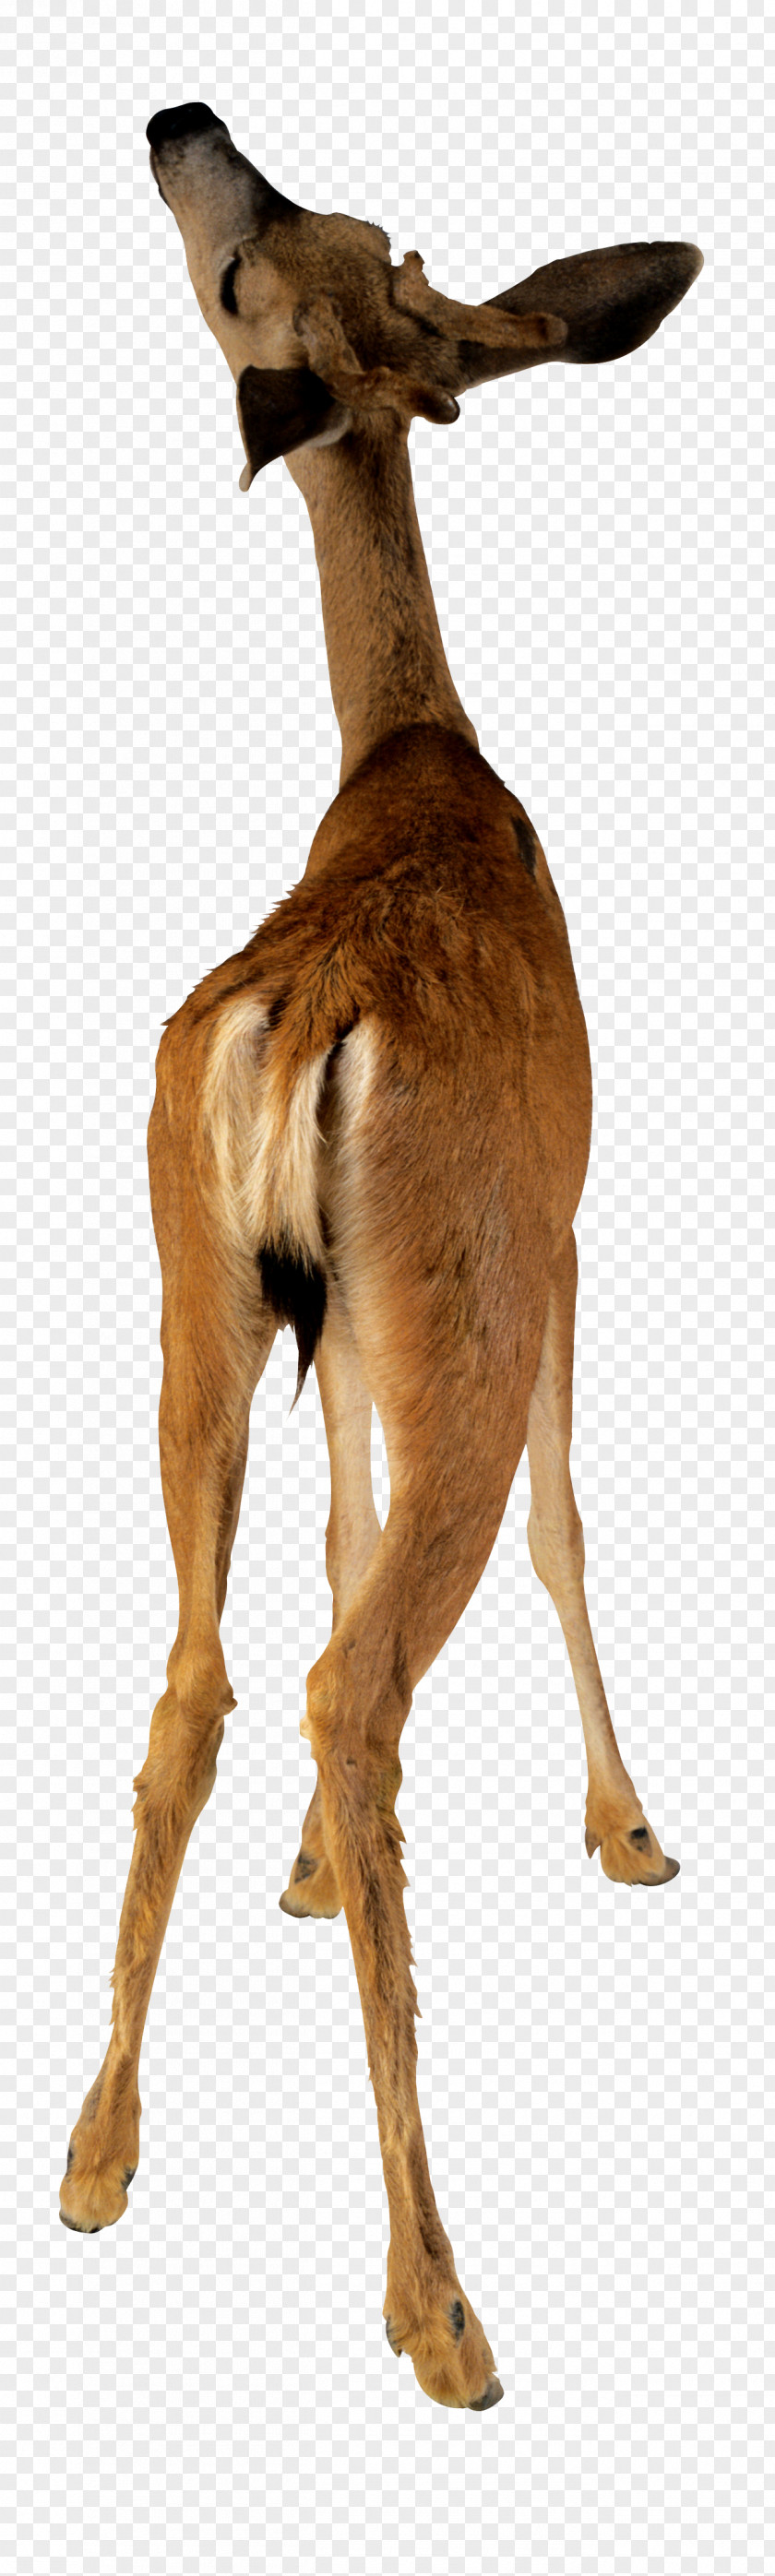 Deer Animal Camel Stock Photography PNG